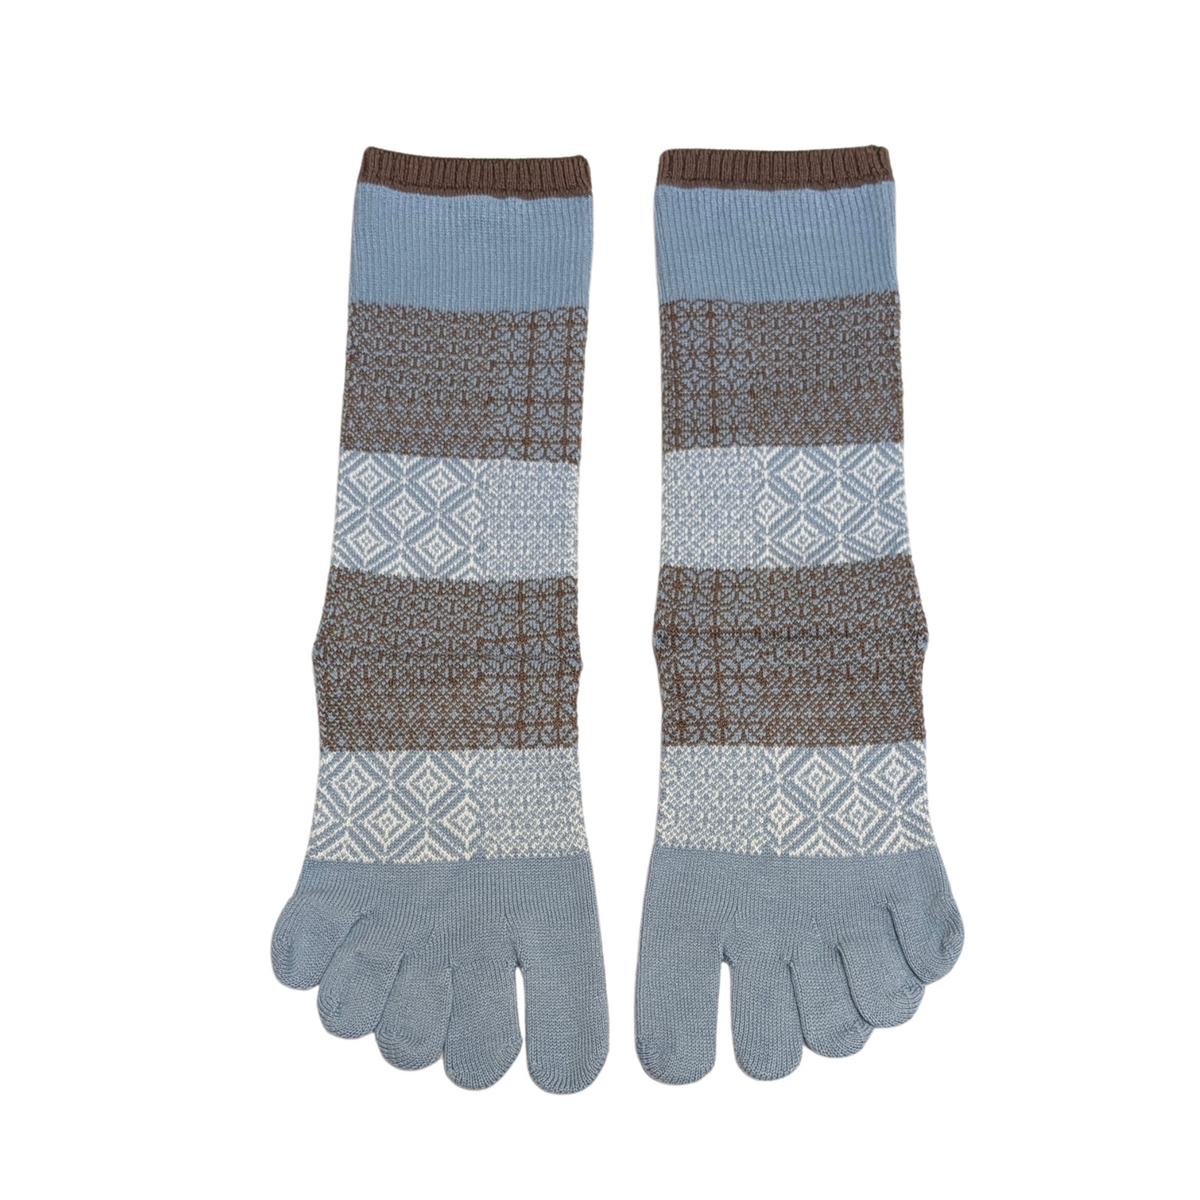 Cotton Blend 3D 5-Toe Socks Japanese Traditional Pattern Medium - CHERRYSTONEstyle